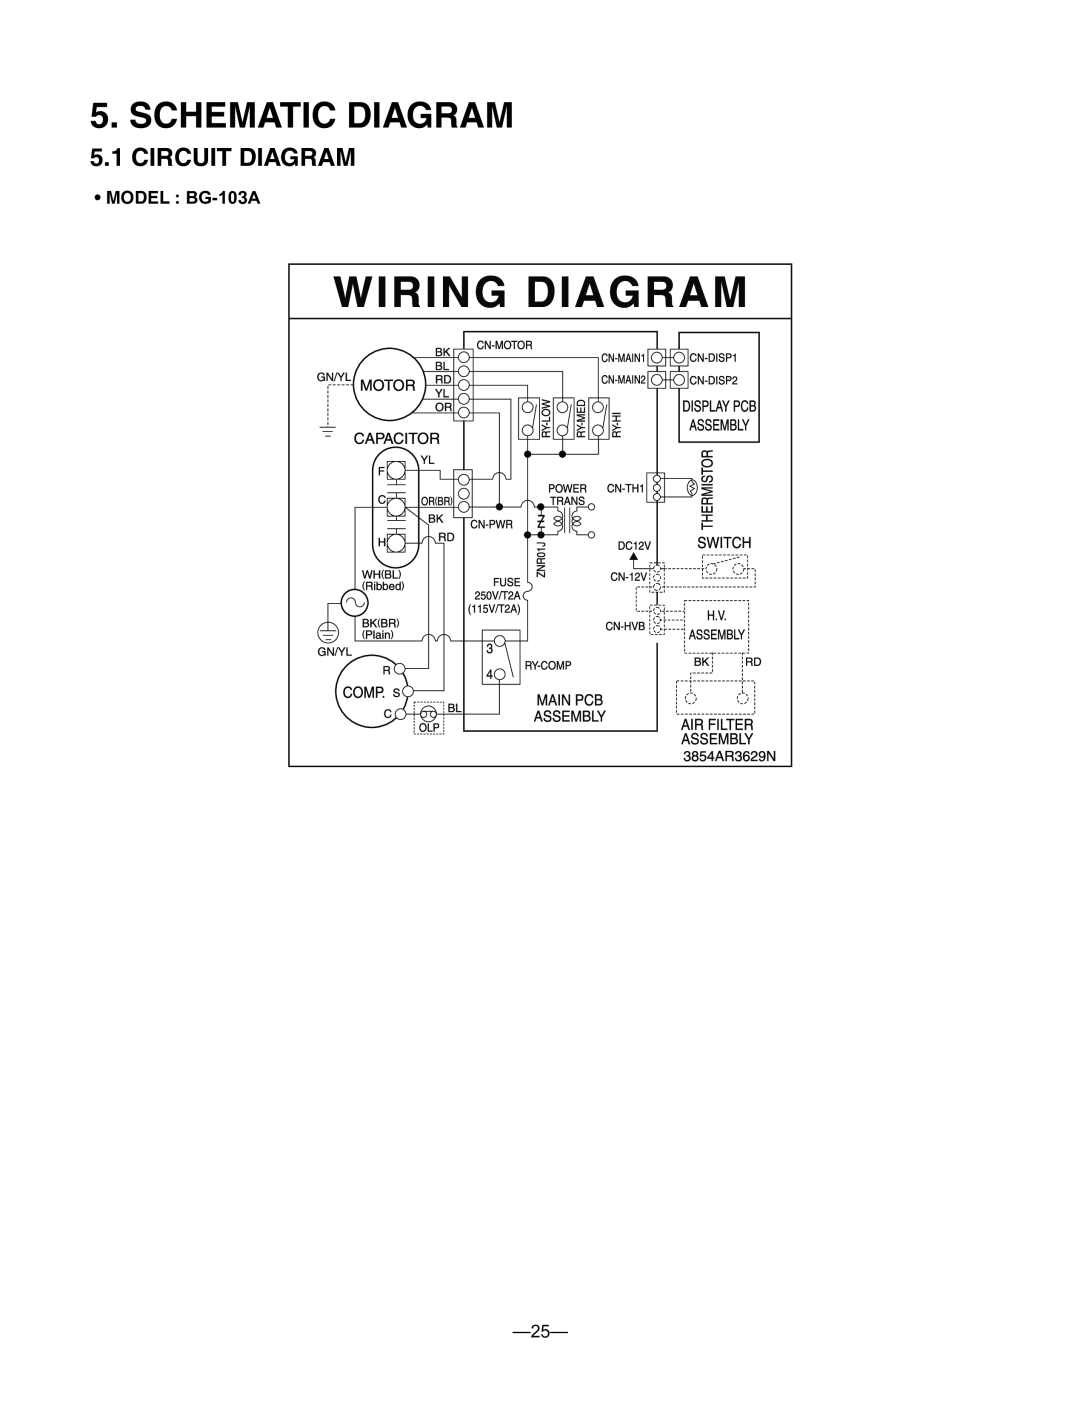 Heat Controller service manual Schematic Diagram, Circuit Diagram, MODEL BG-103A 